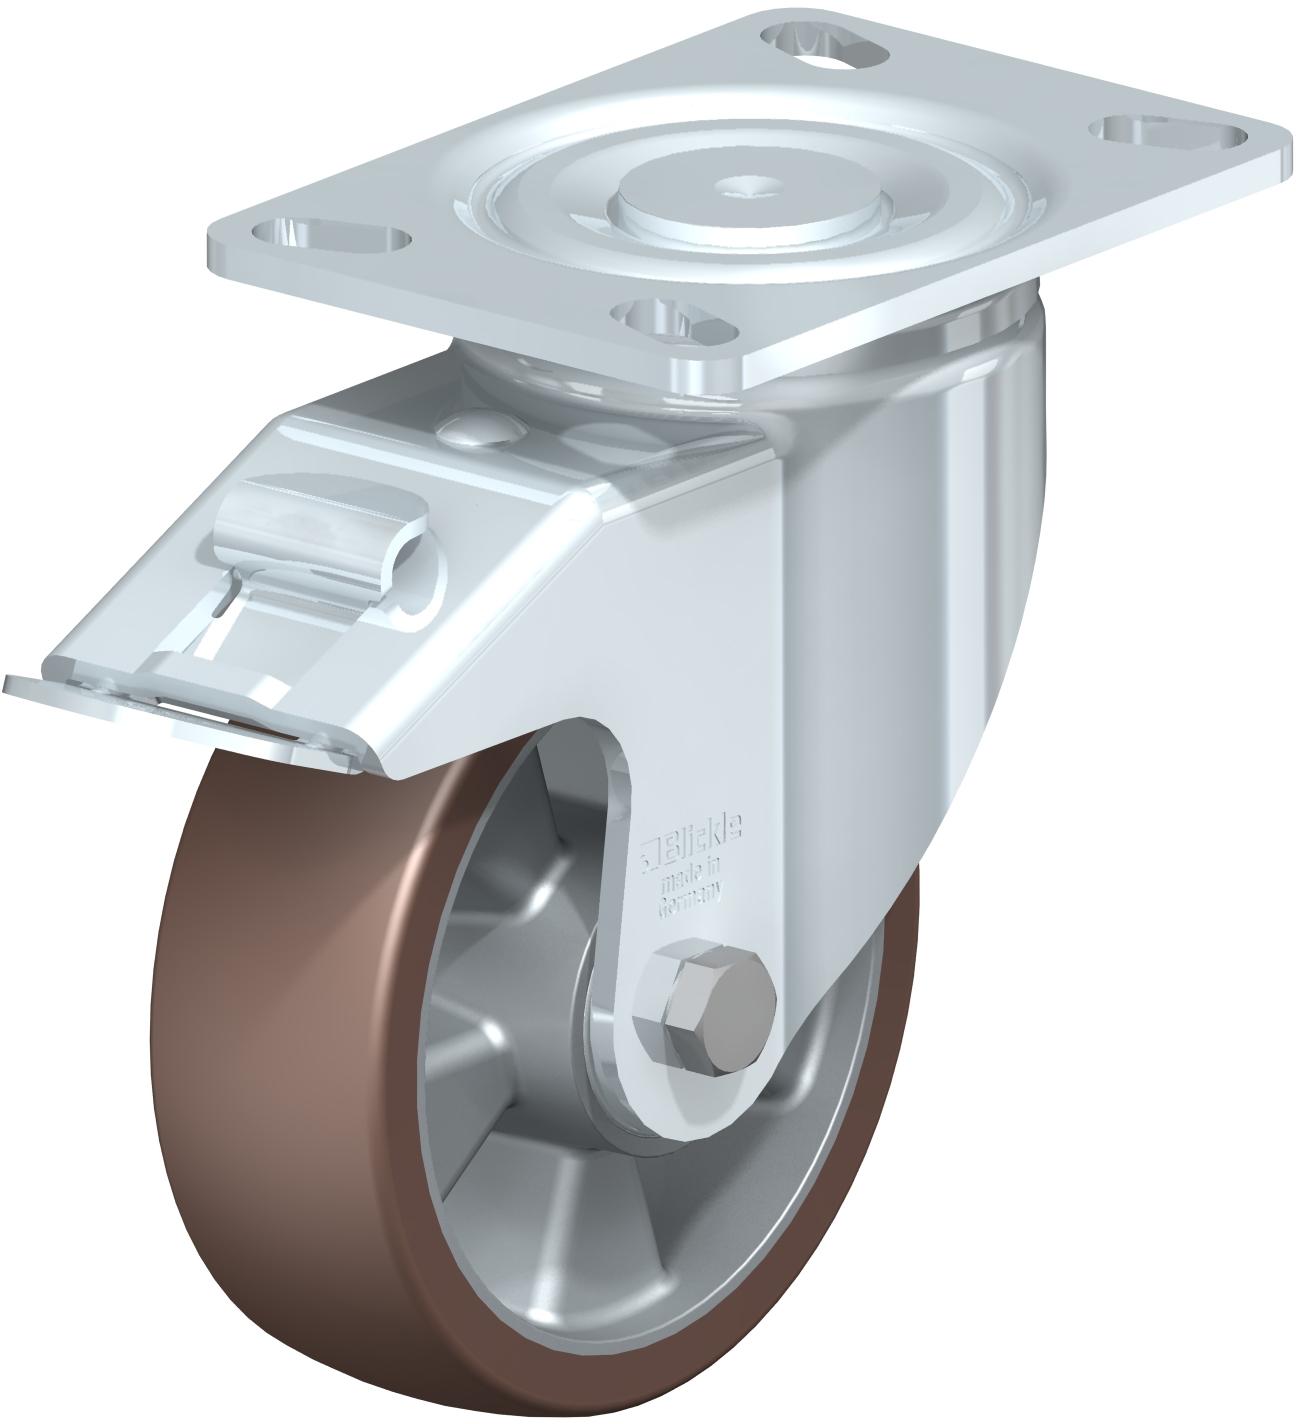 Heavy Duty Industrial Large Top Plate Casters - Swivel, Ball Bearing, Blickle Besthane Brown Polyurethane Tread On Aluminum Core Wheel, Stop-Fix Brake LH-ALB 200K-16-FI